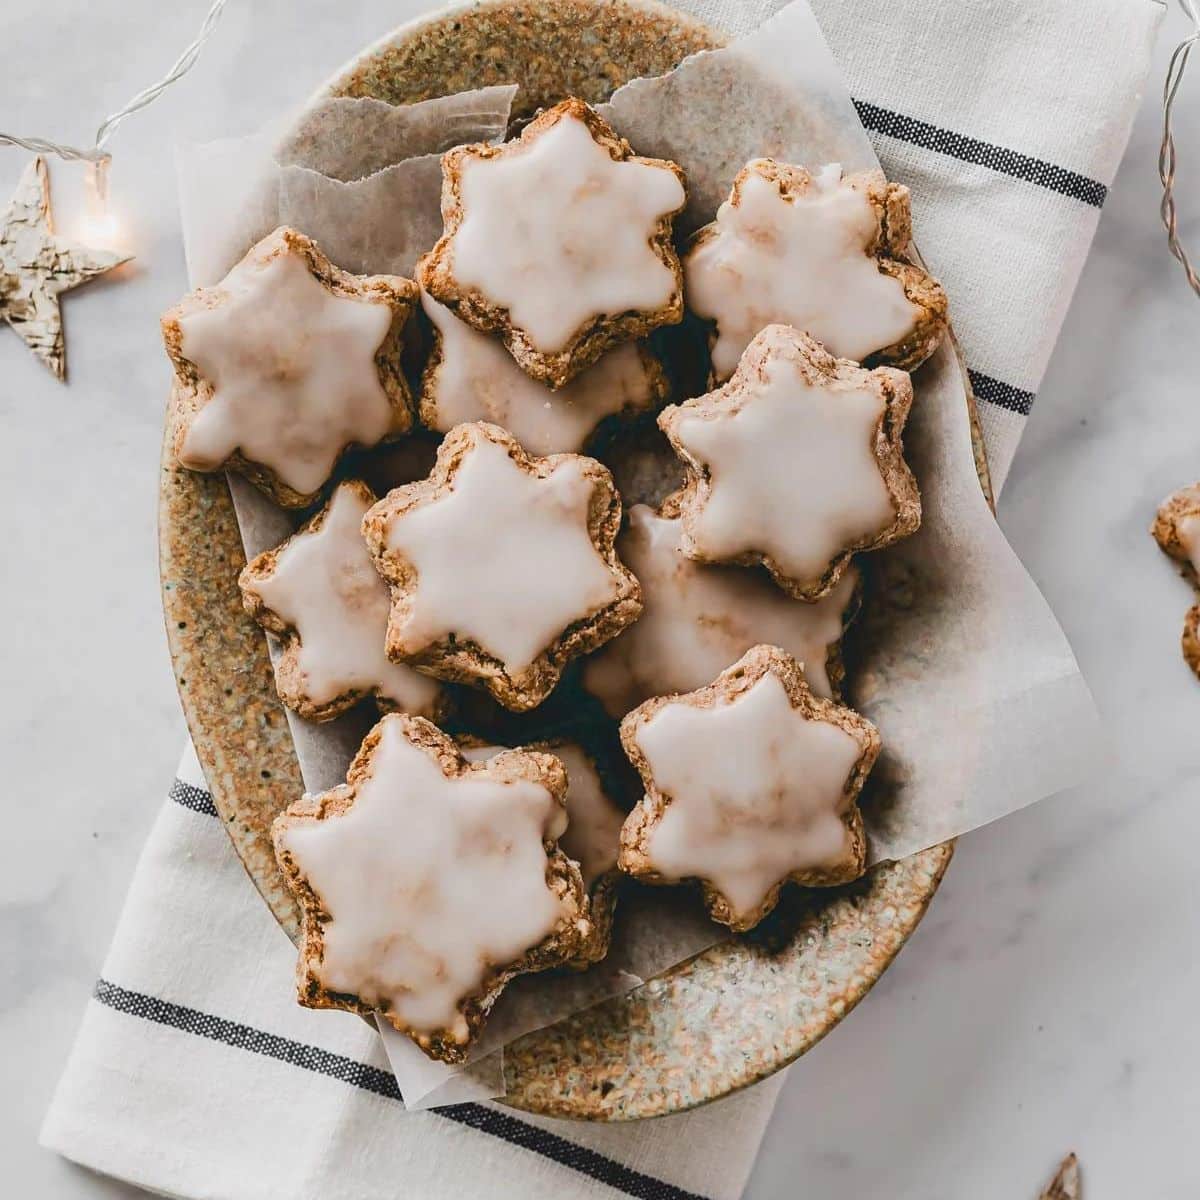 Cinnamon star cookies on a platter.